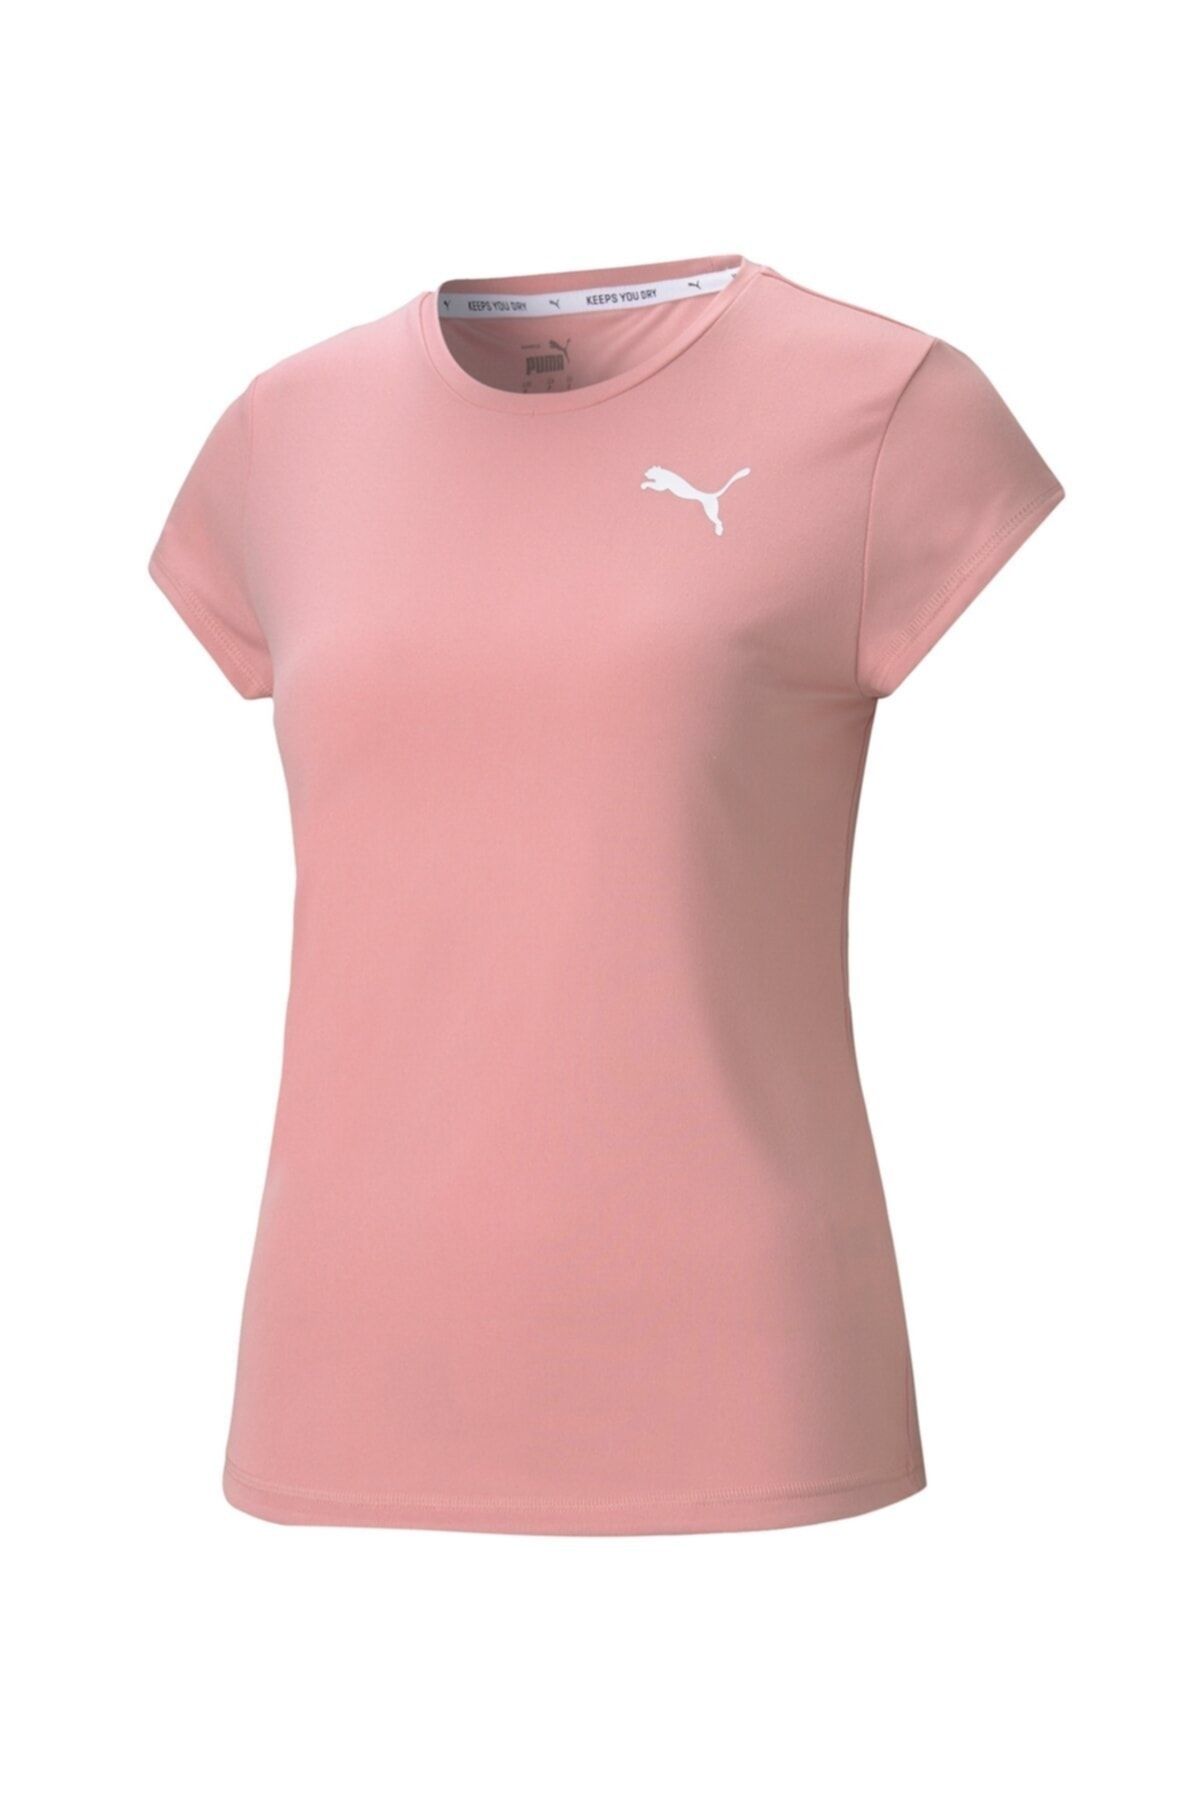 Puma Actıve Tee Brıdal Rose Kadın Kısa Kol T-shirt